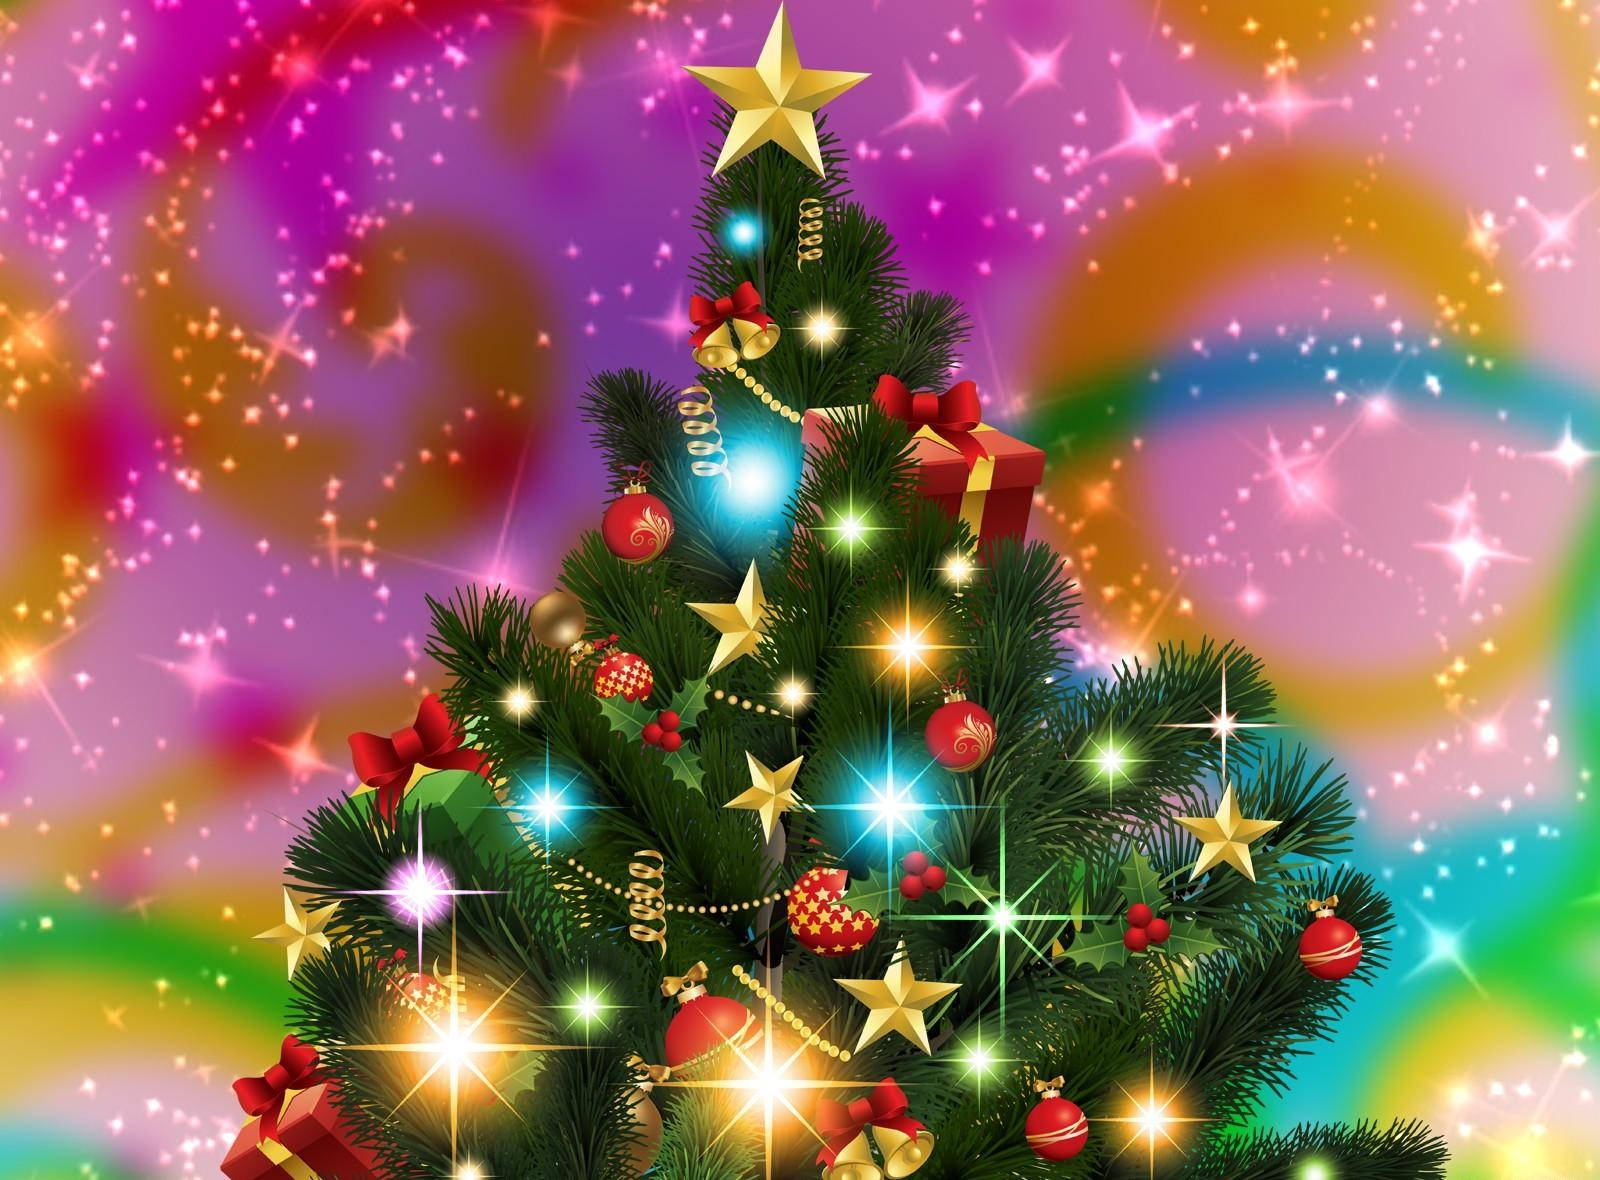 Colorful Christmas Tree Holiday Digital Art Background